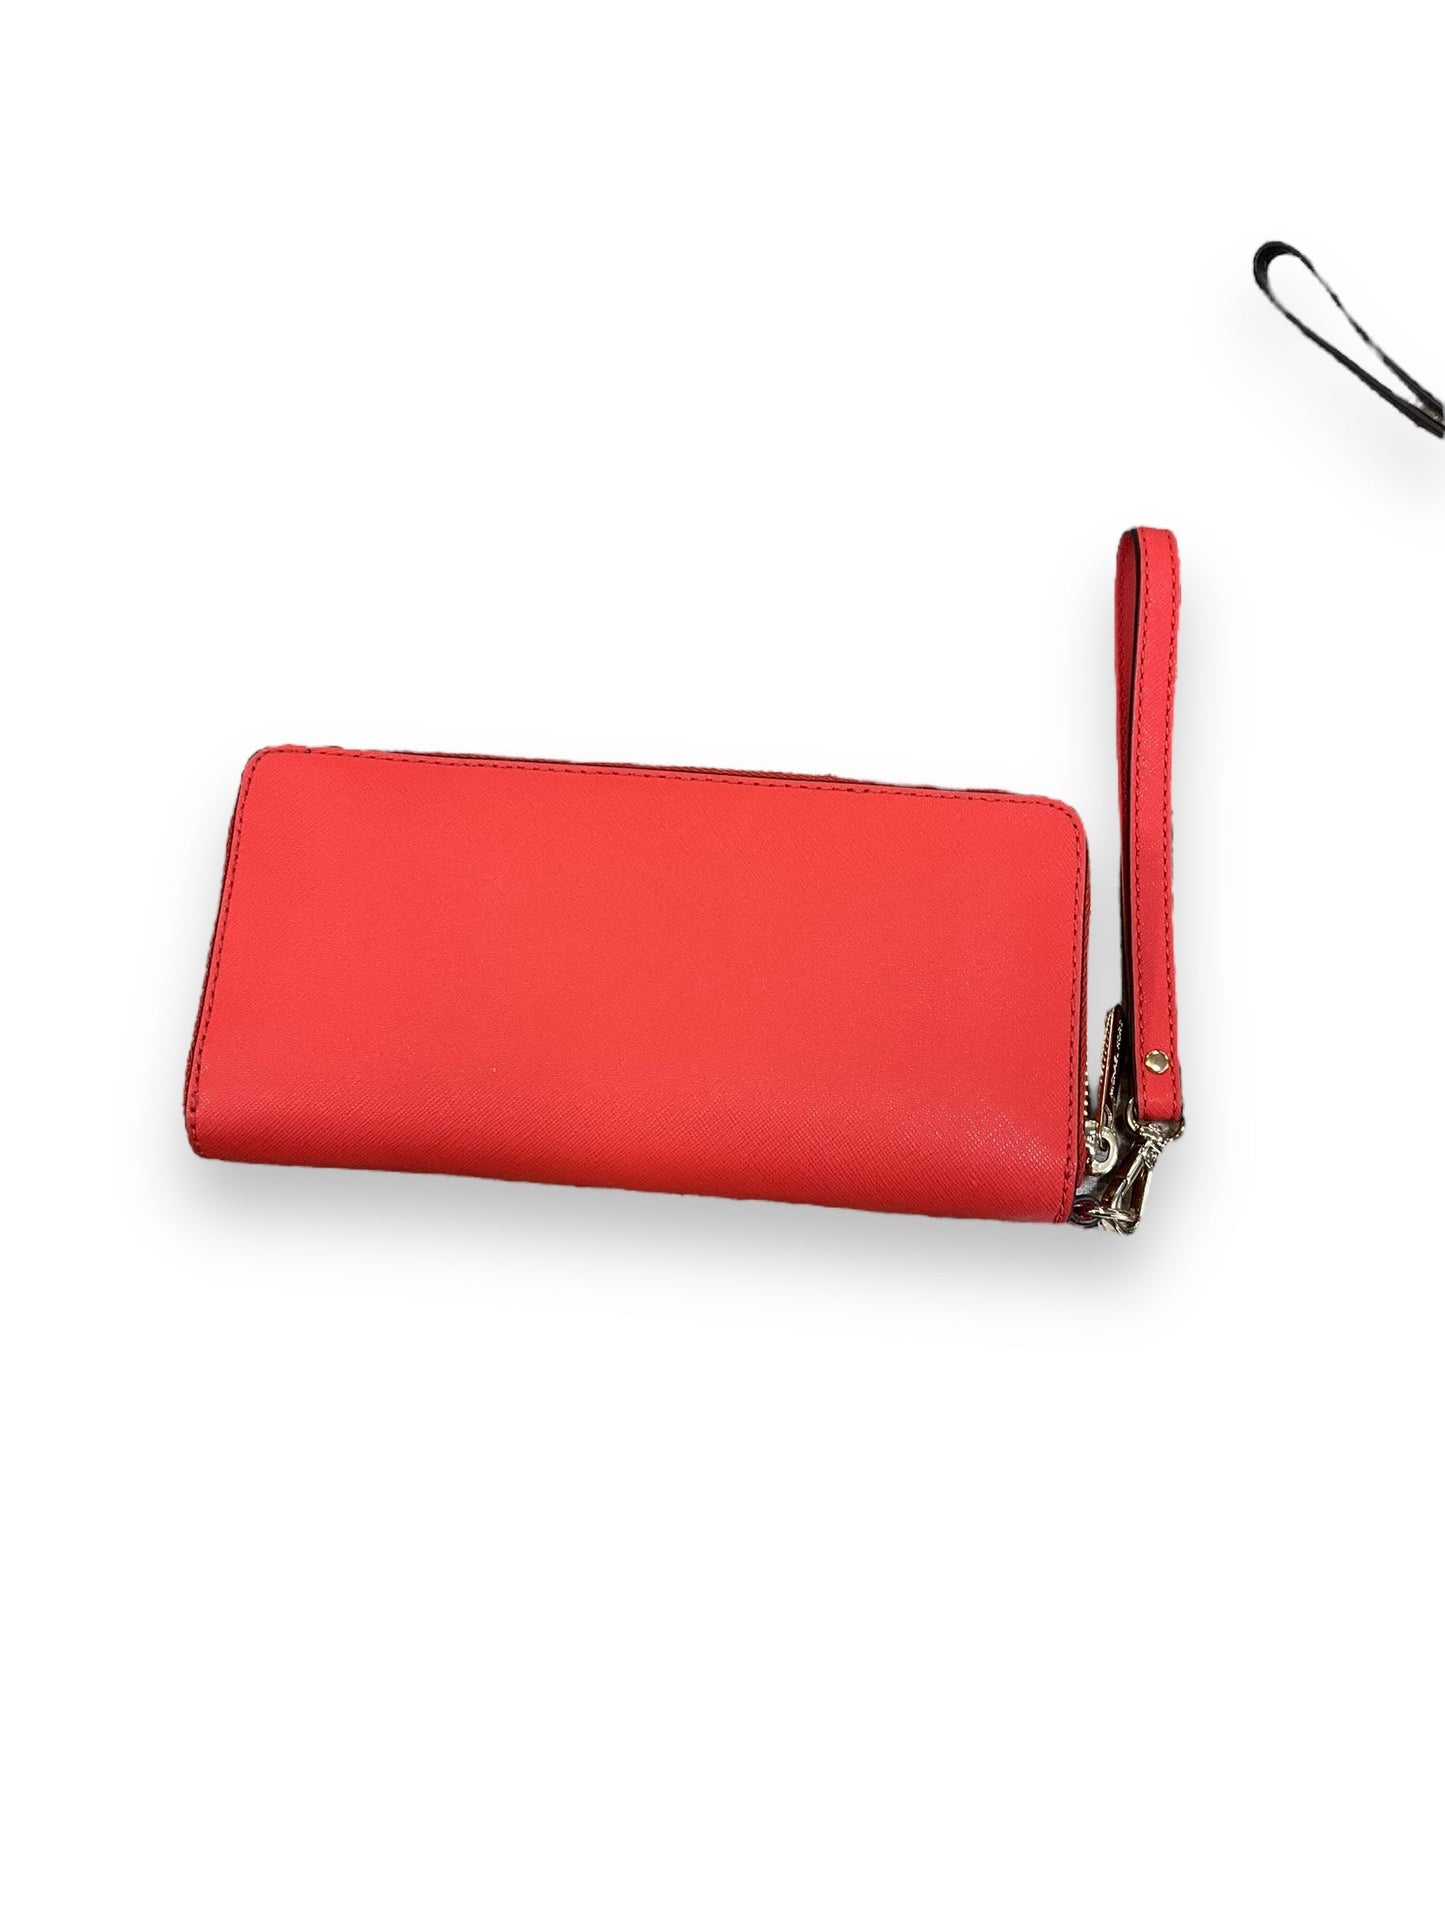 Red Wallet Designer Michael Kors, Size Medium